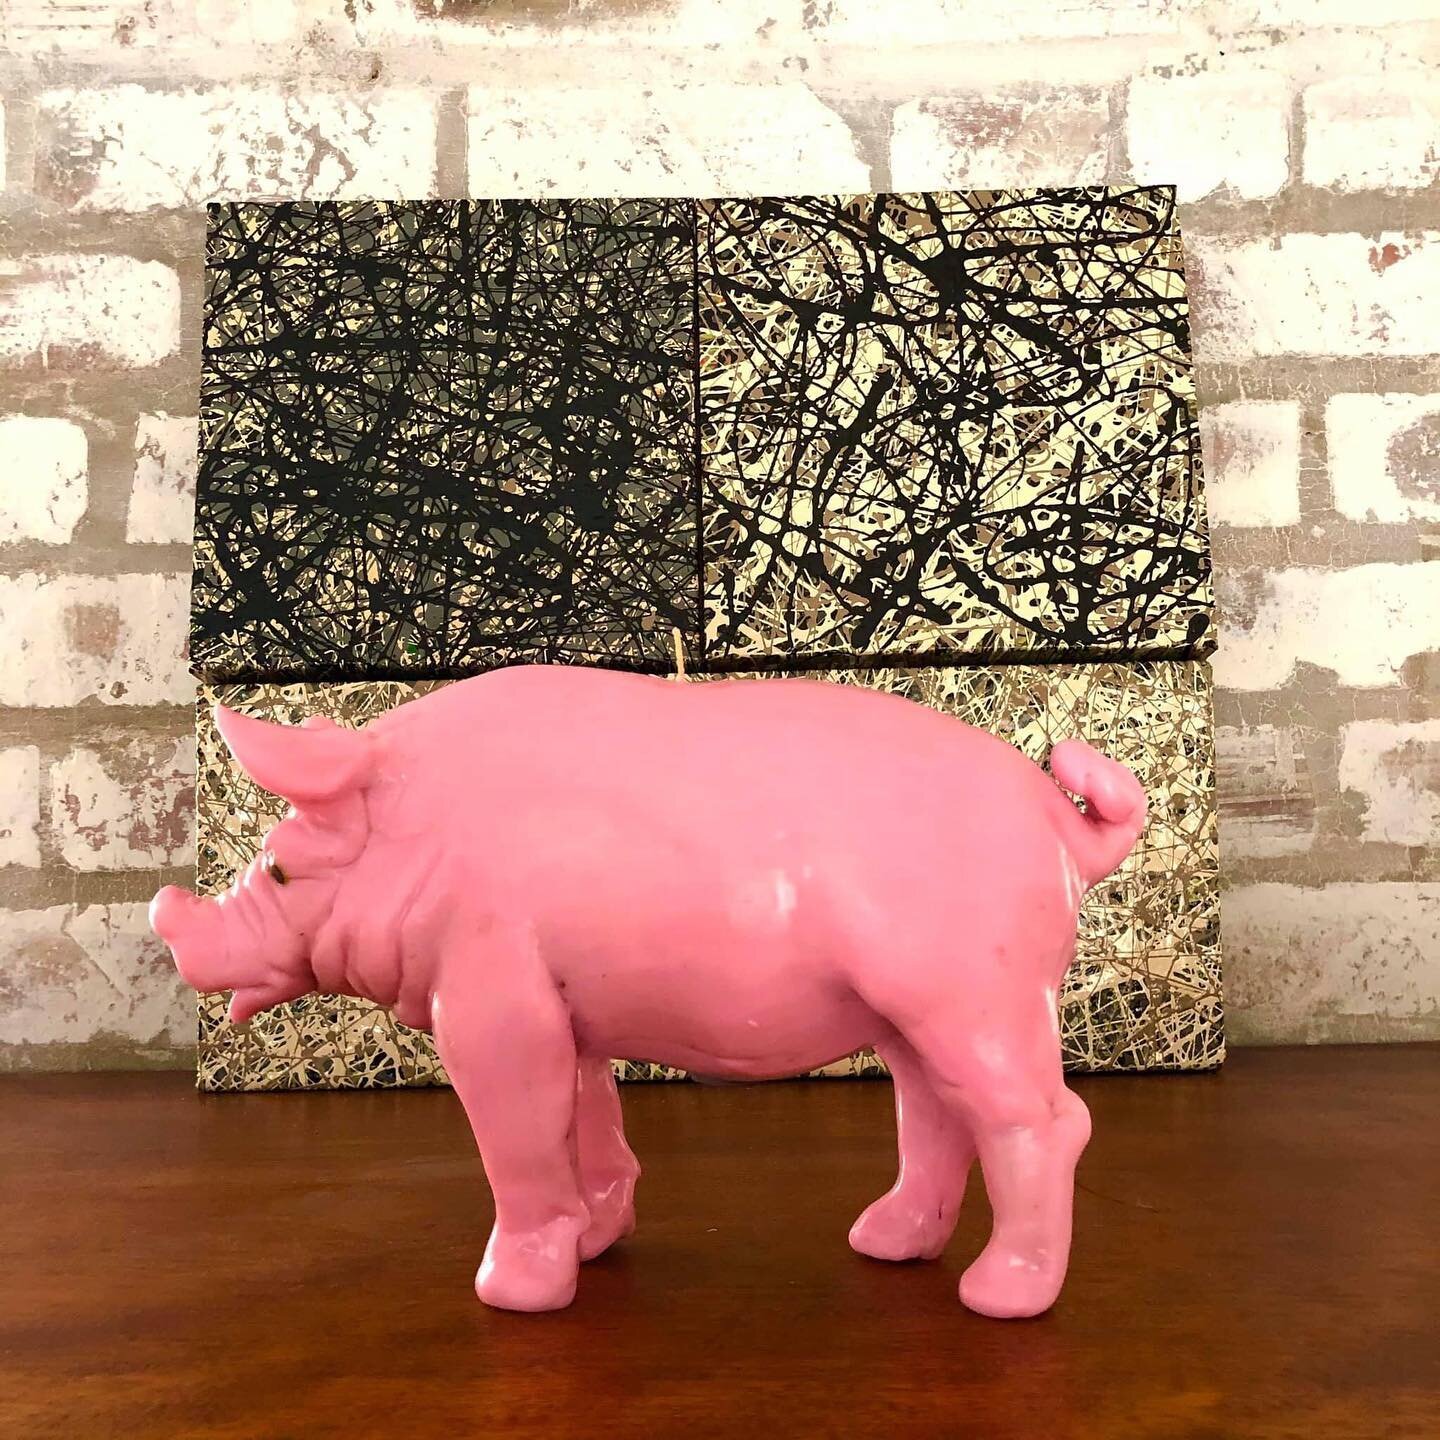 .
P L A Y F U L 
D I S P L A Y
▪️
Three of my small artworks in a favourite collector//friend&rsquo;s home.
Thank you @ziekiezone 
▪️
#artisfun #groupingartwork #smallartwork #artdisplay #onlylines #onlylineart #pigsofinstagram #pinkpiggie #pink #bla